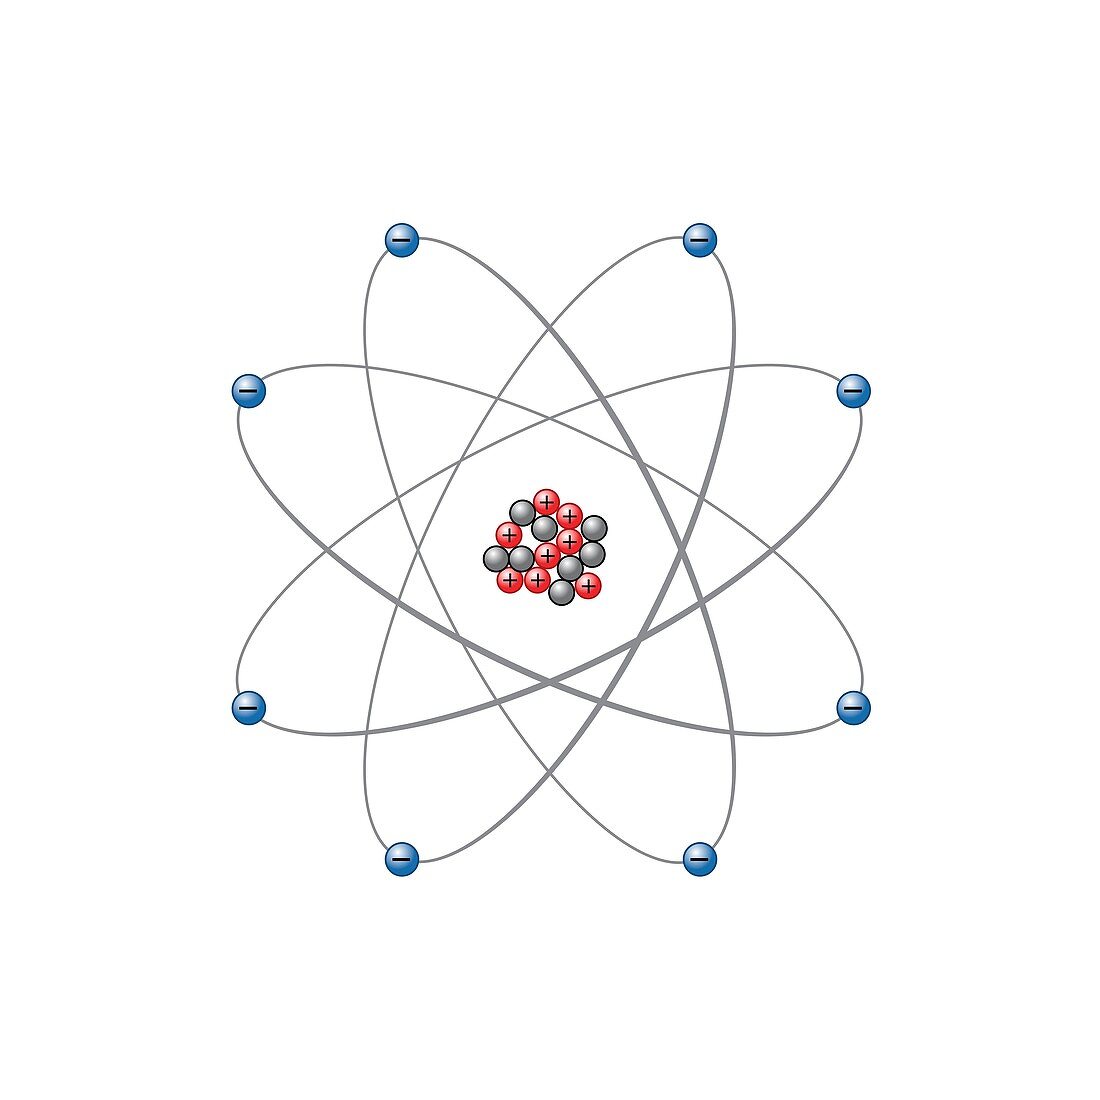 Oxygen atom, illustration